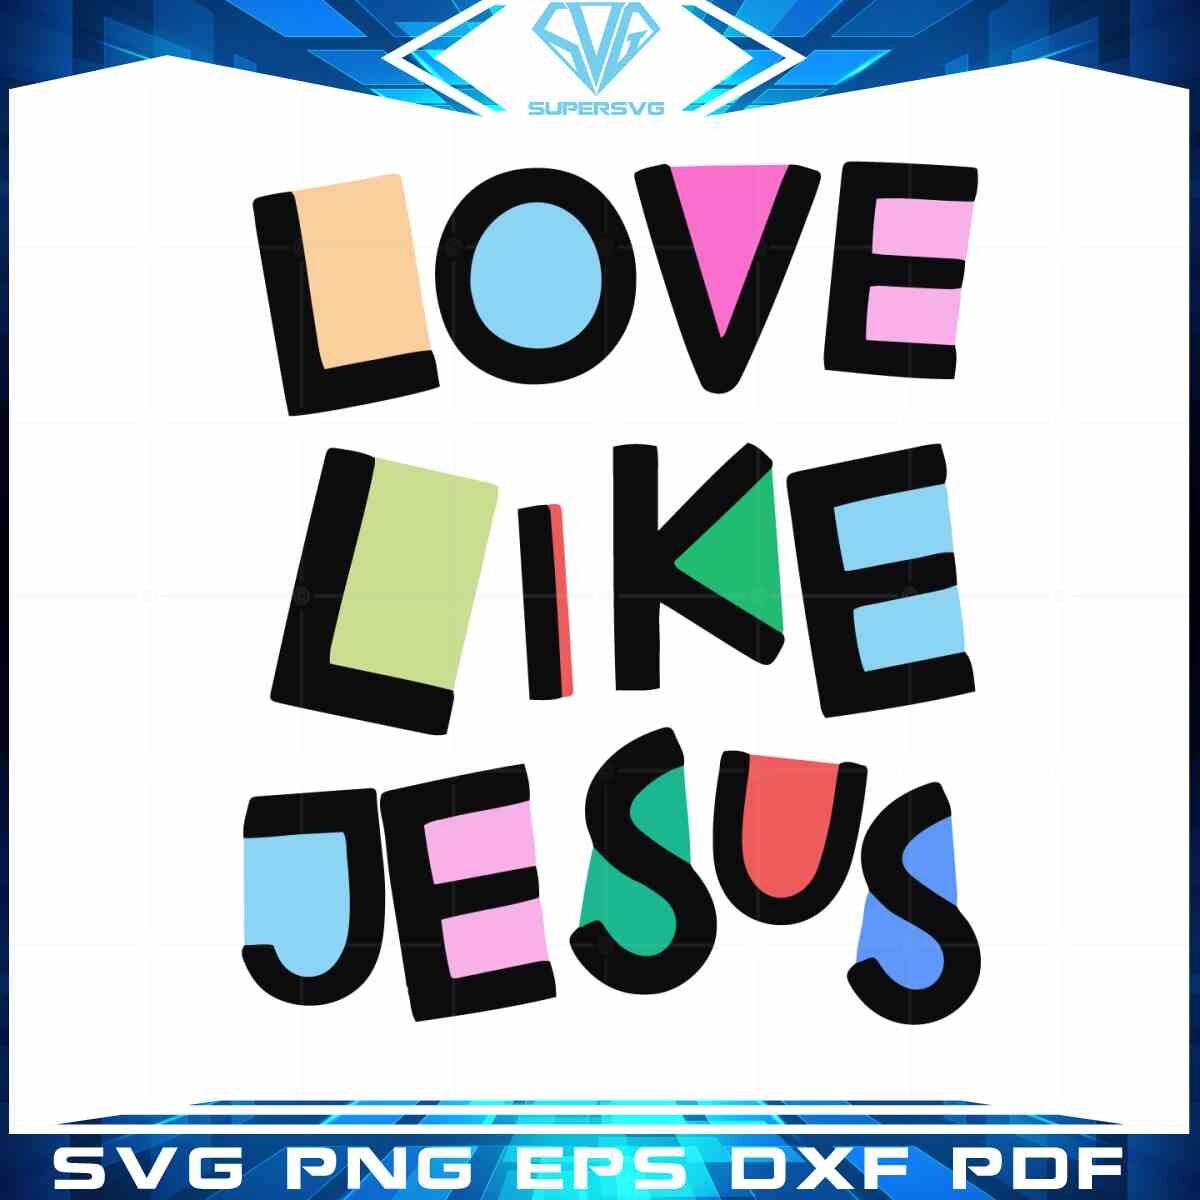 love-like-jesus-christ-svg-tshirt-design-graphic-files